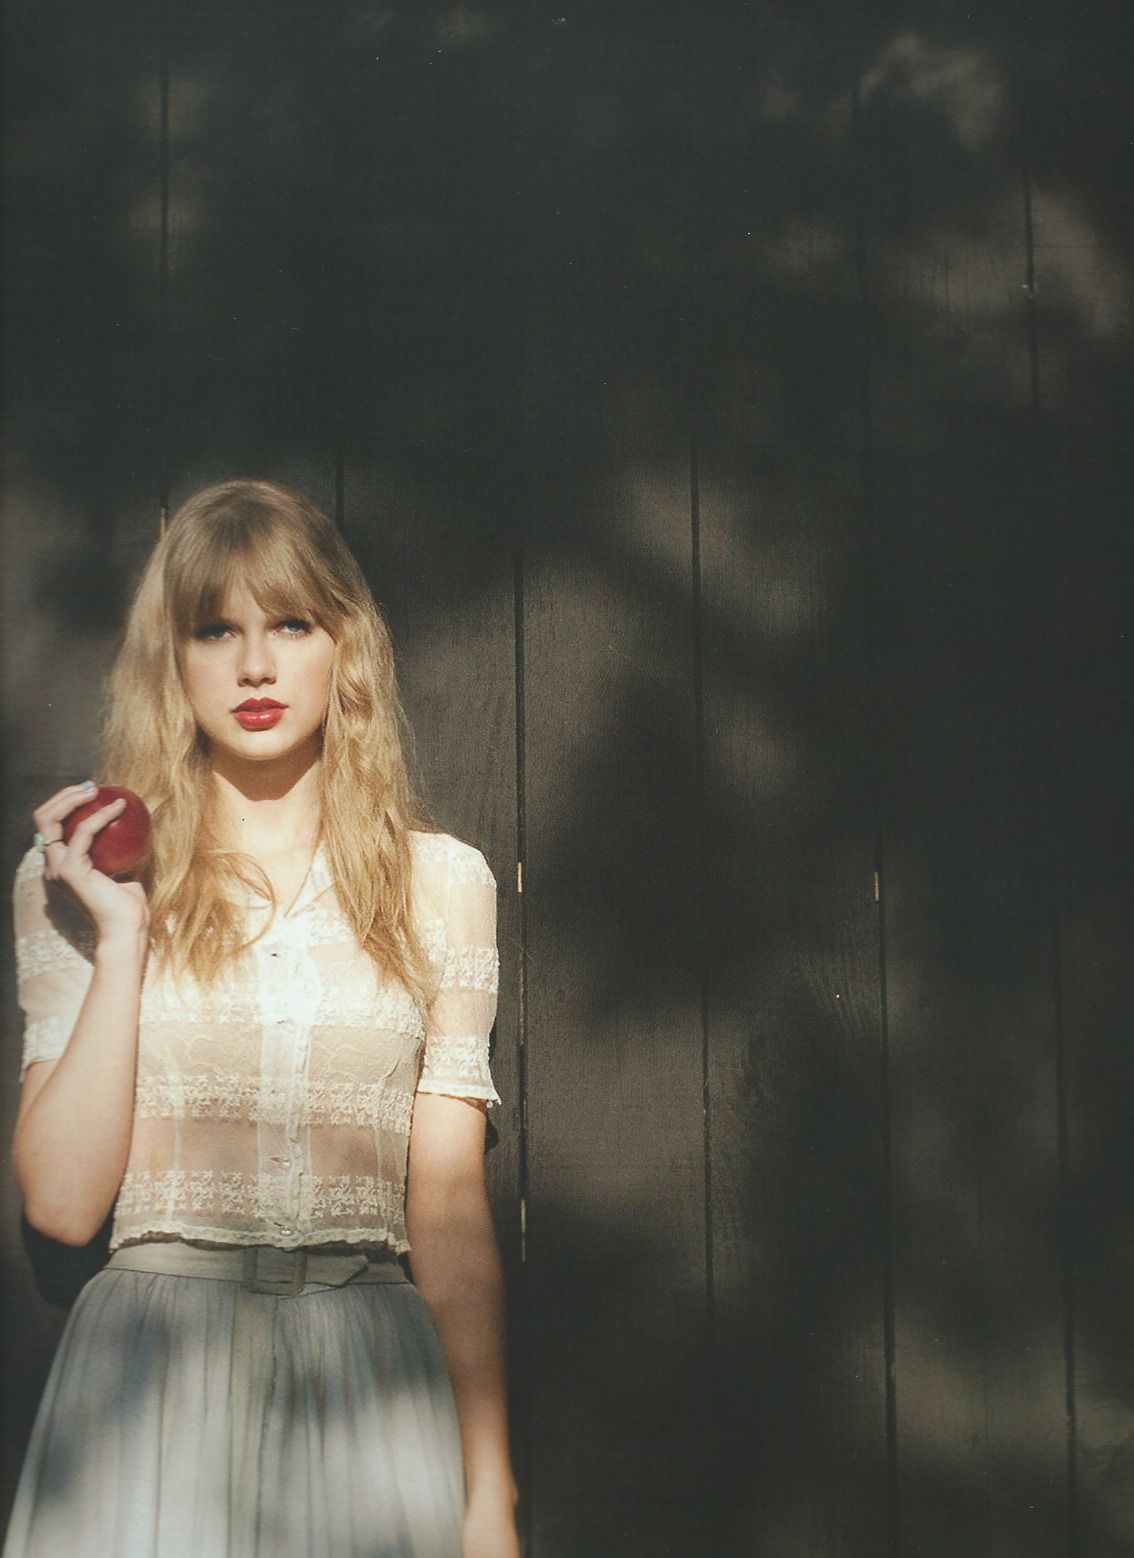 T.S. wallpaper. Taylor swift red, Taylor swift red album, Taylor swift wallpaper